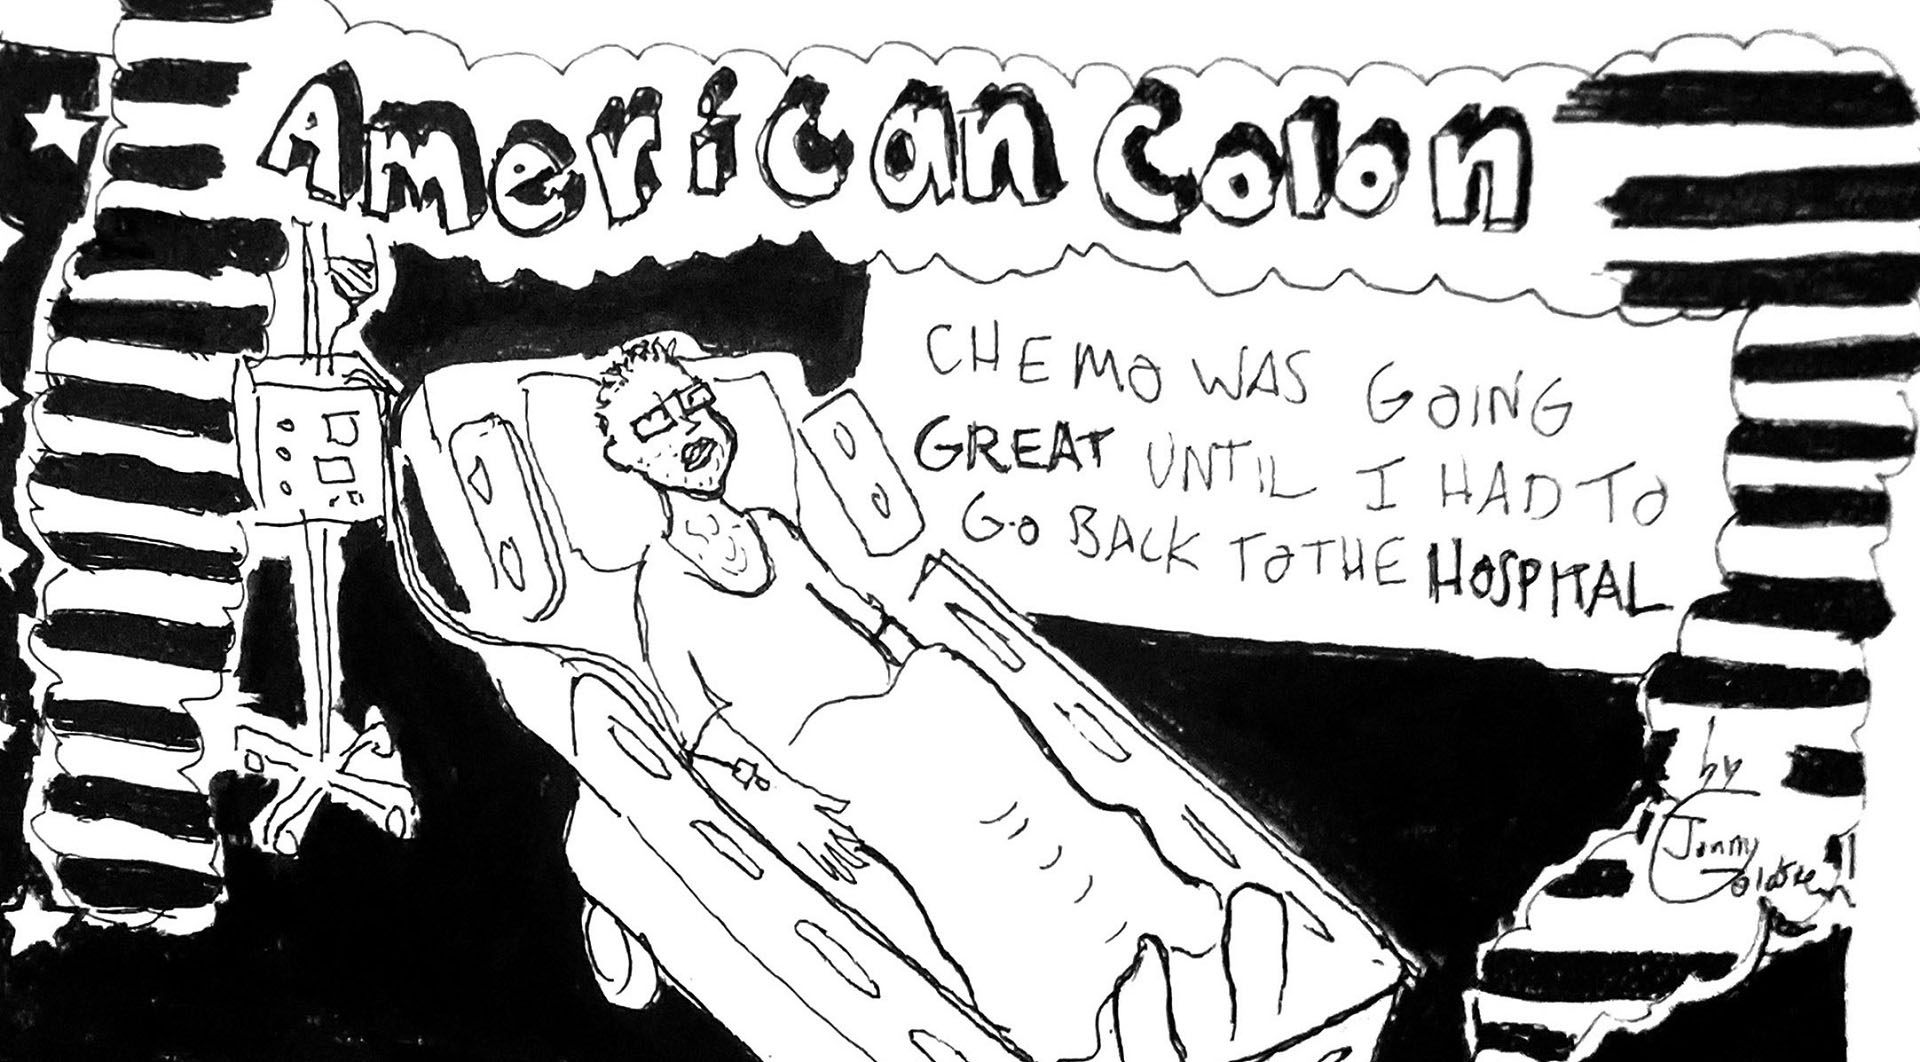 Image of cartoon man lying hospital bed.